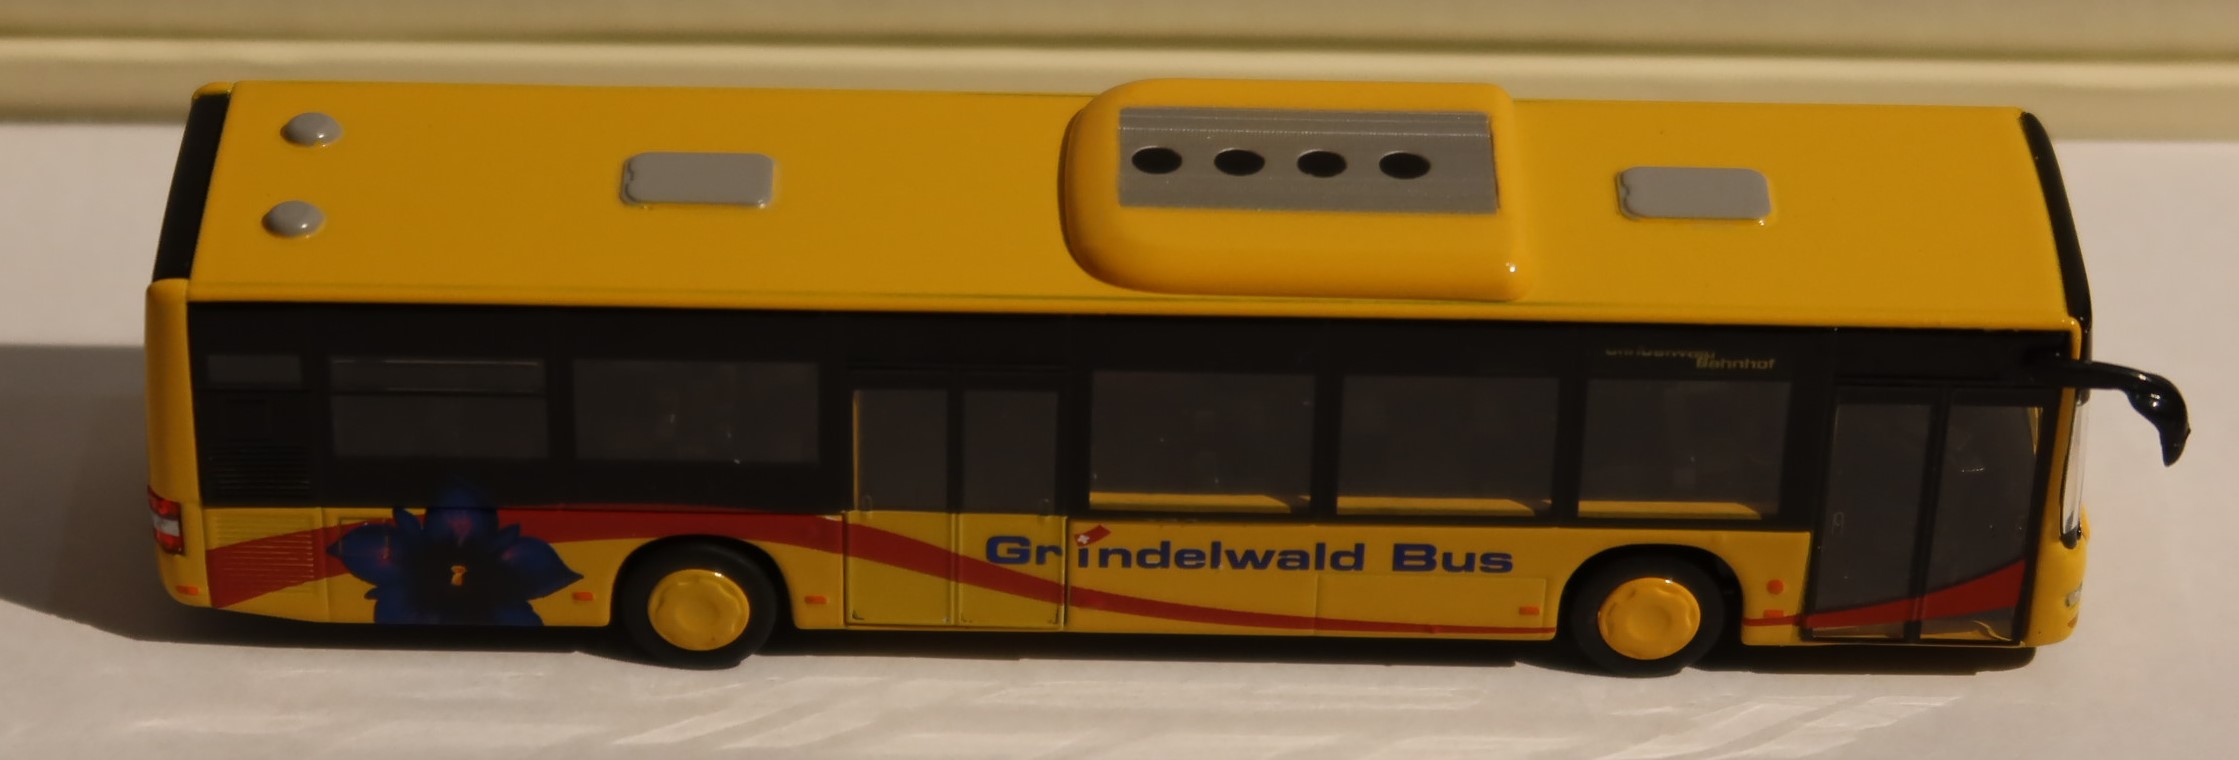 Grindlewald - Sammlerbox